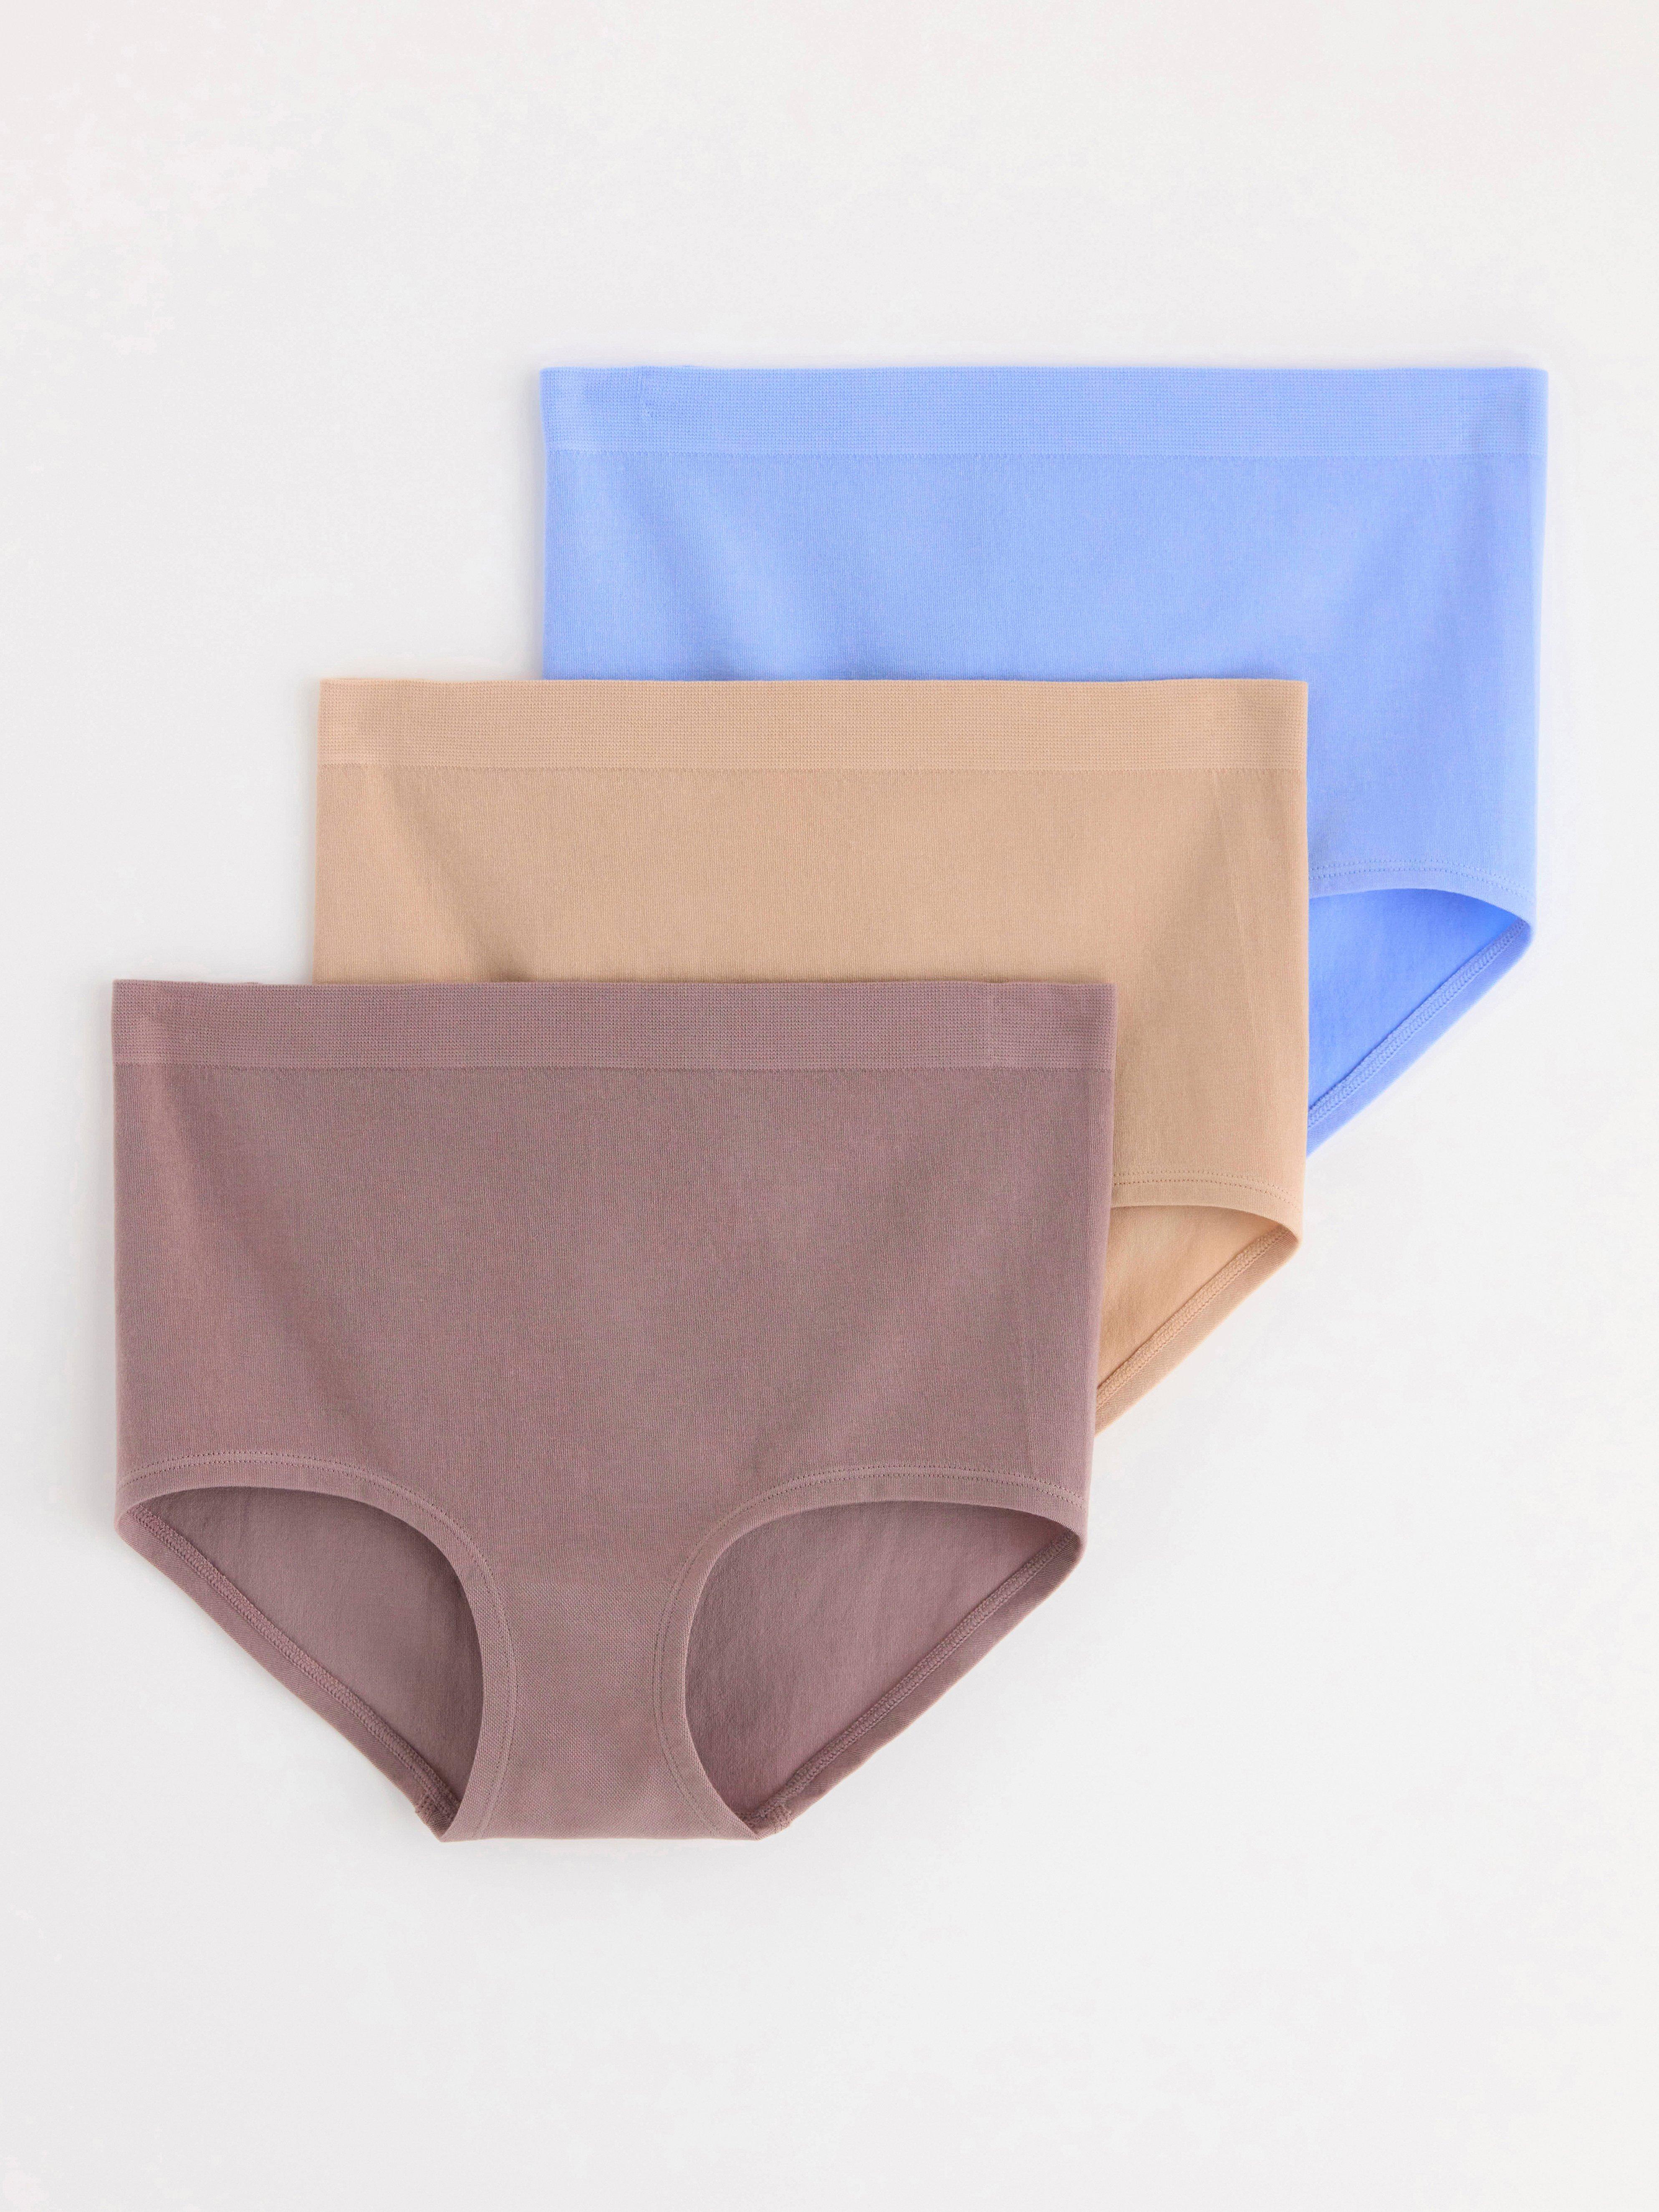 Buy CALIST 25 Pieces Women Cotton Seamless Panties Set Medium